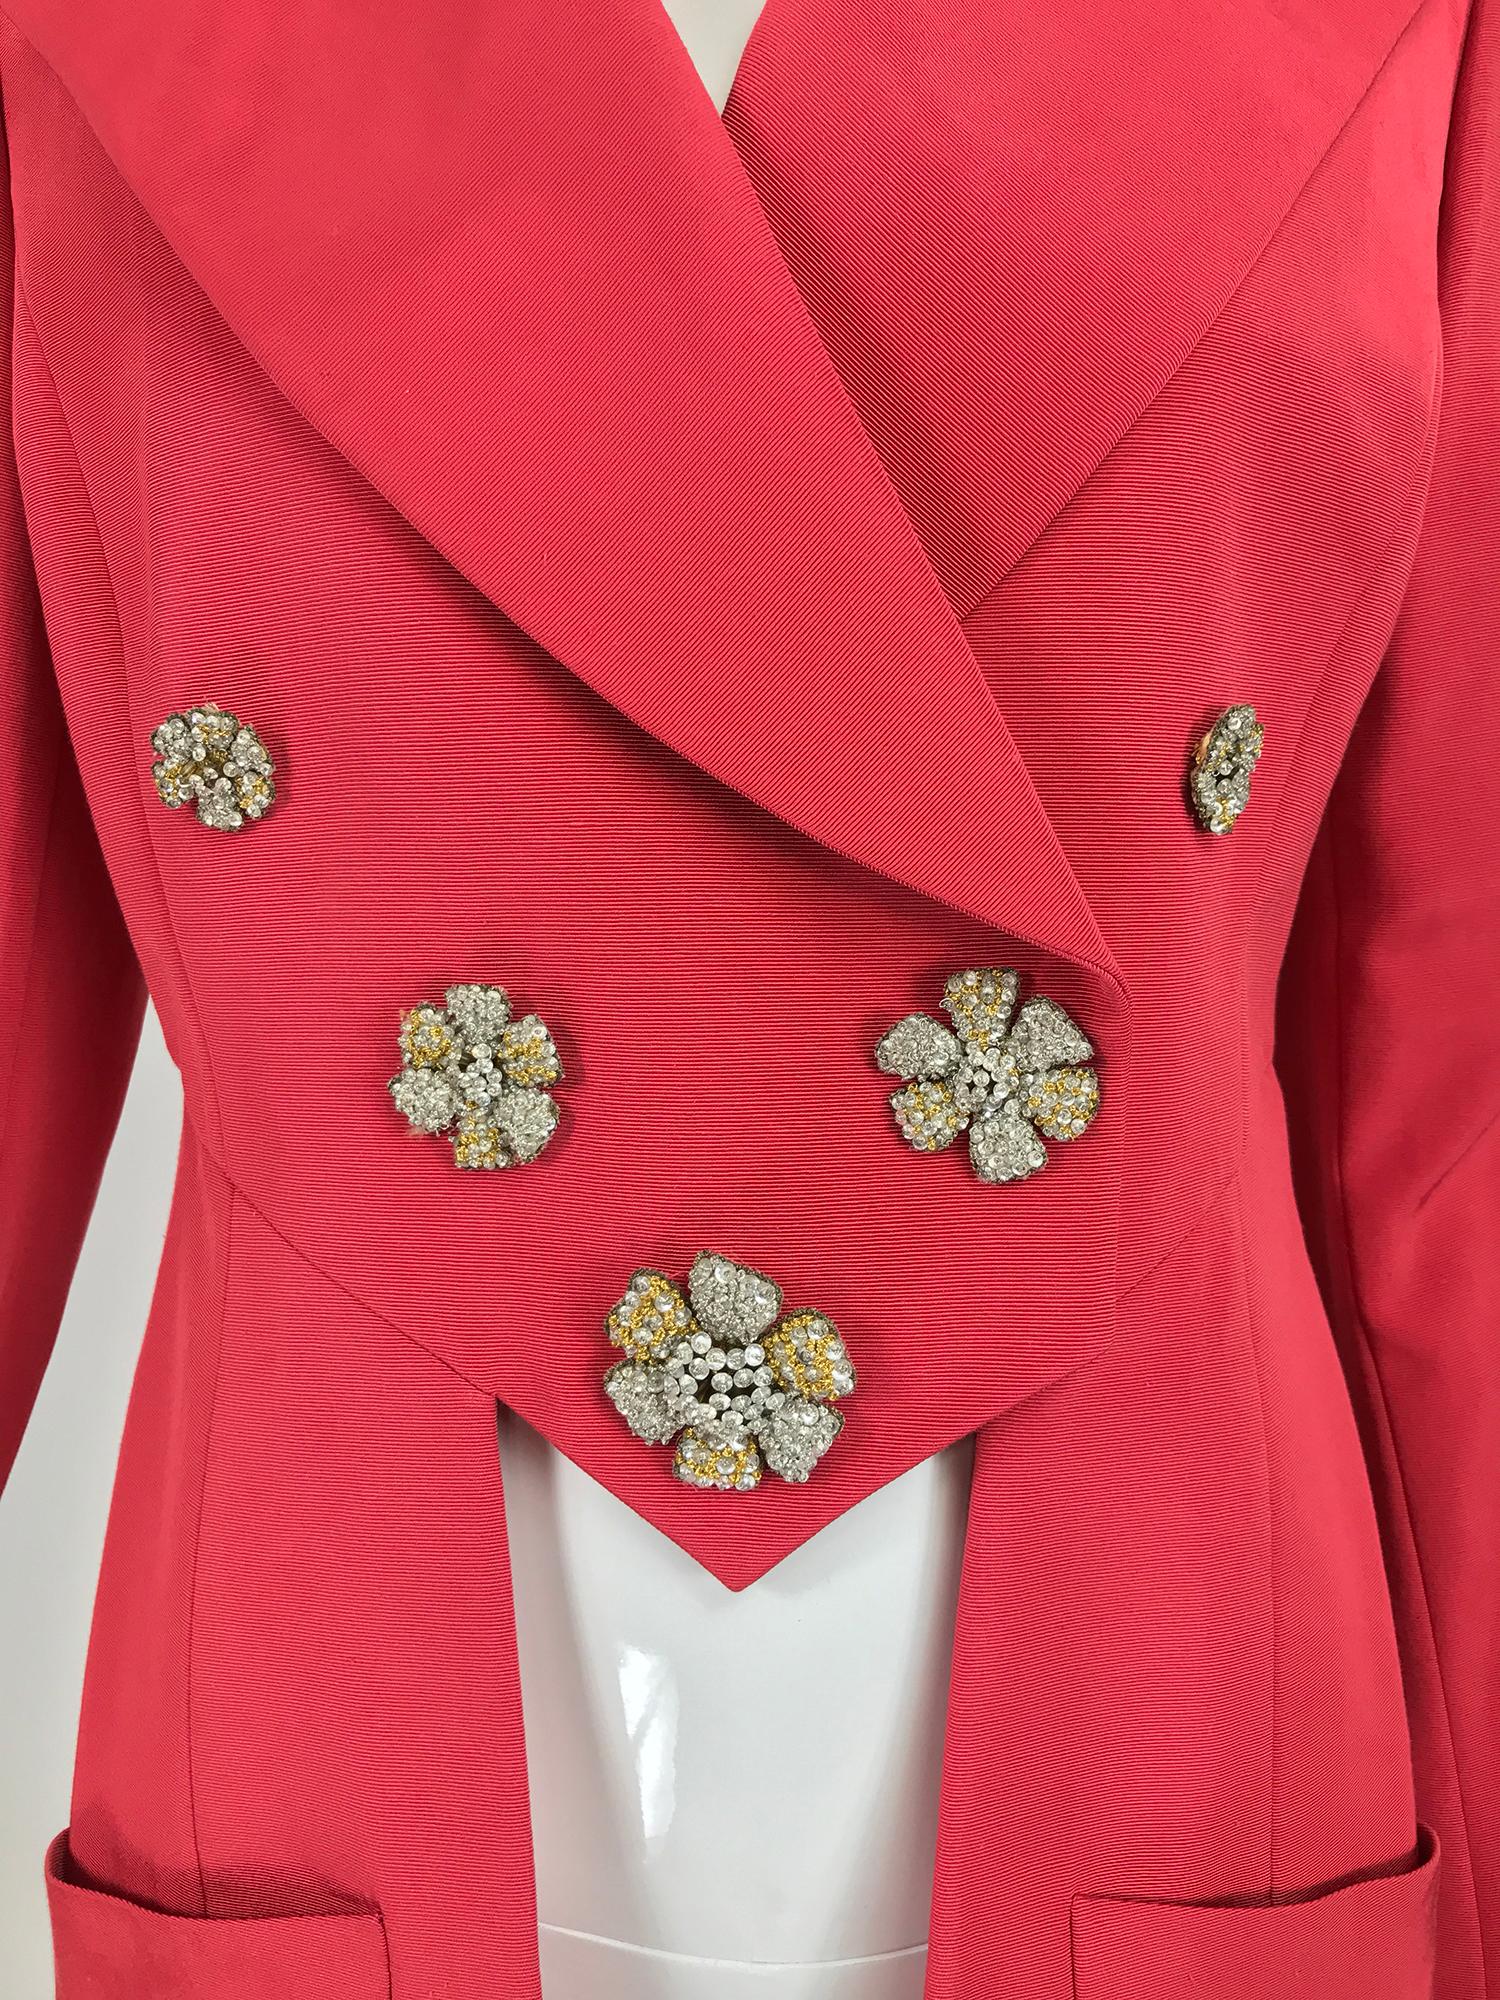 Karl Lagerfeld Coral Red Silk Faille Reddingote Style Coat 1990s 3